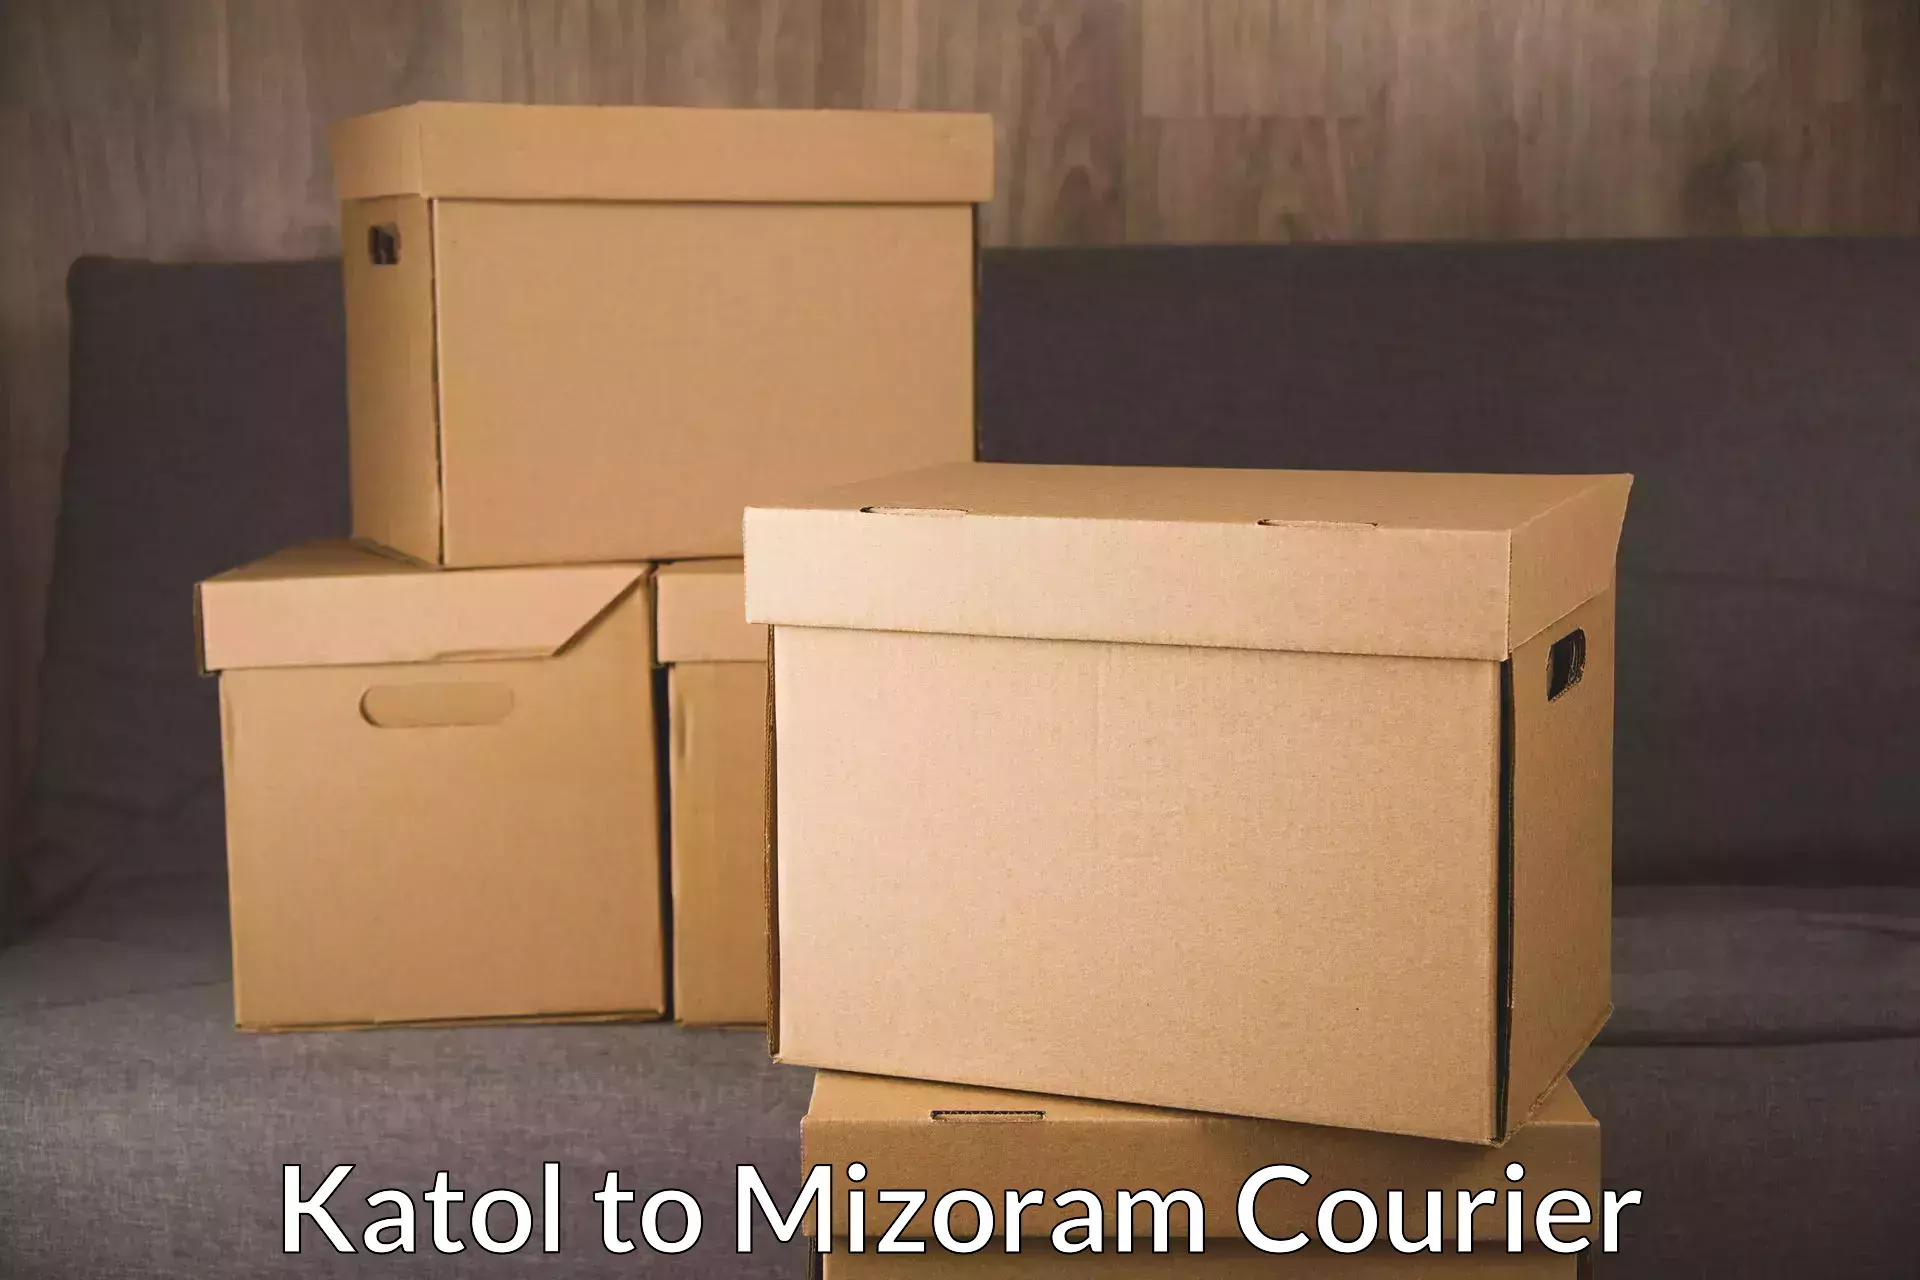 High-priority parcel service Katol to Mizoram